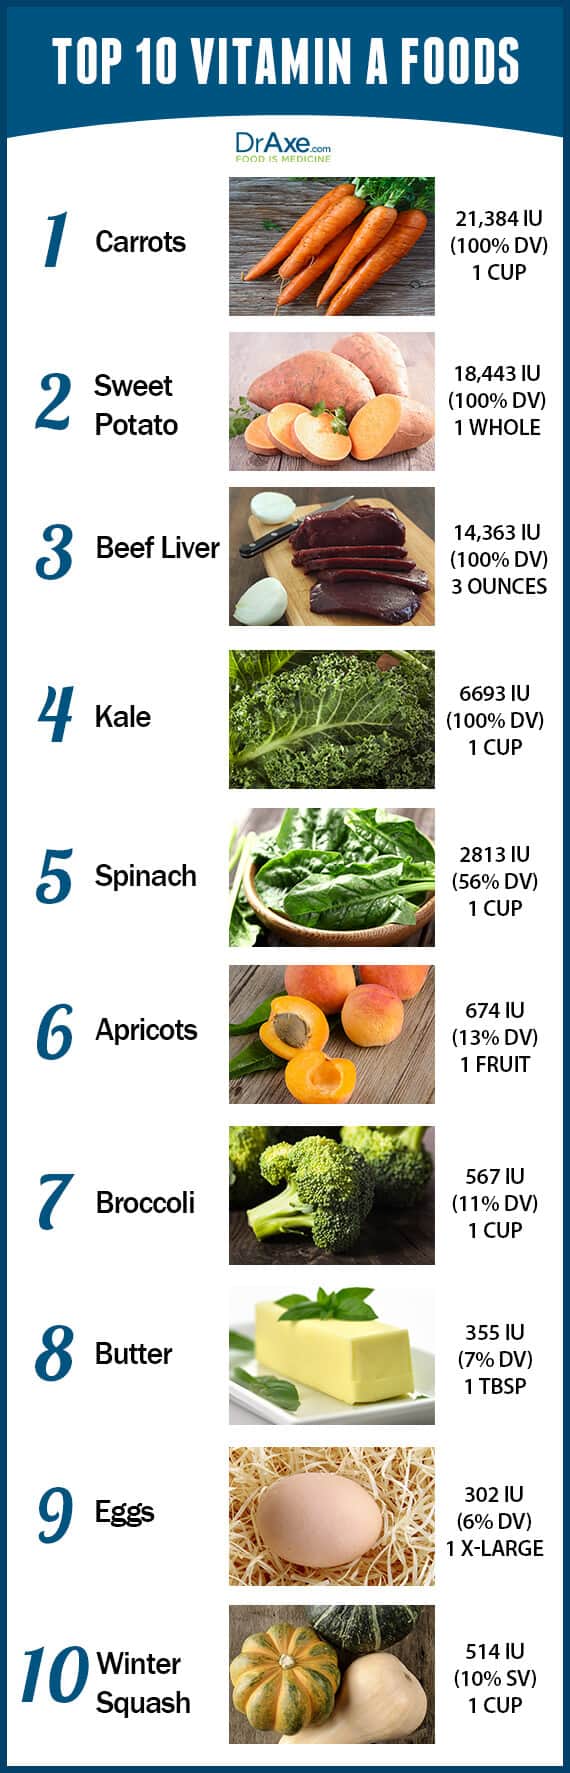 Top 10 Vitamin A Foods List